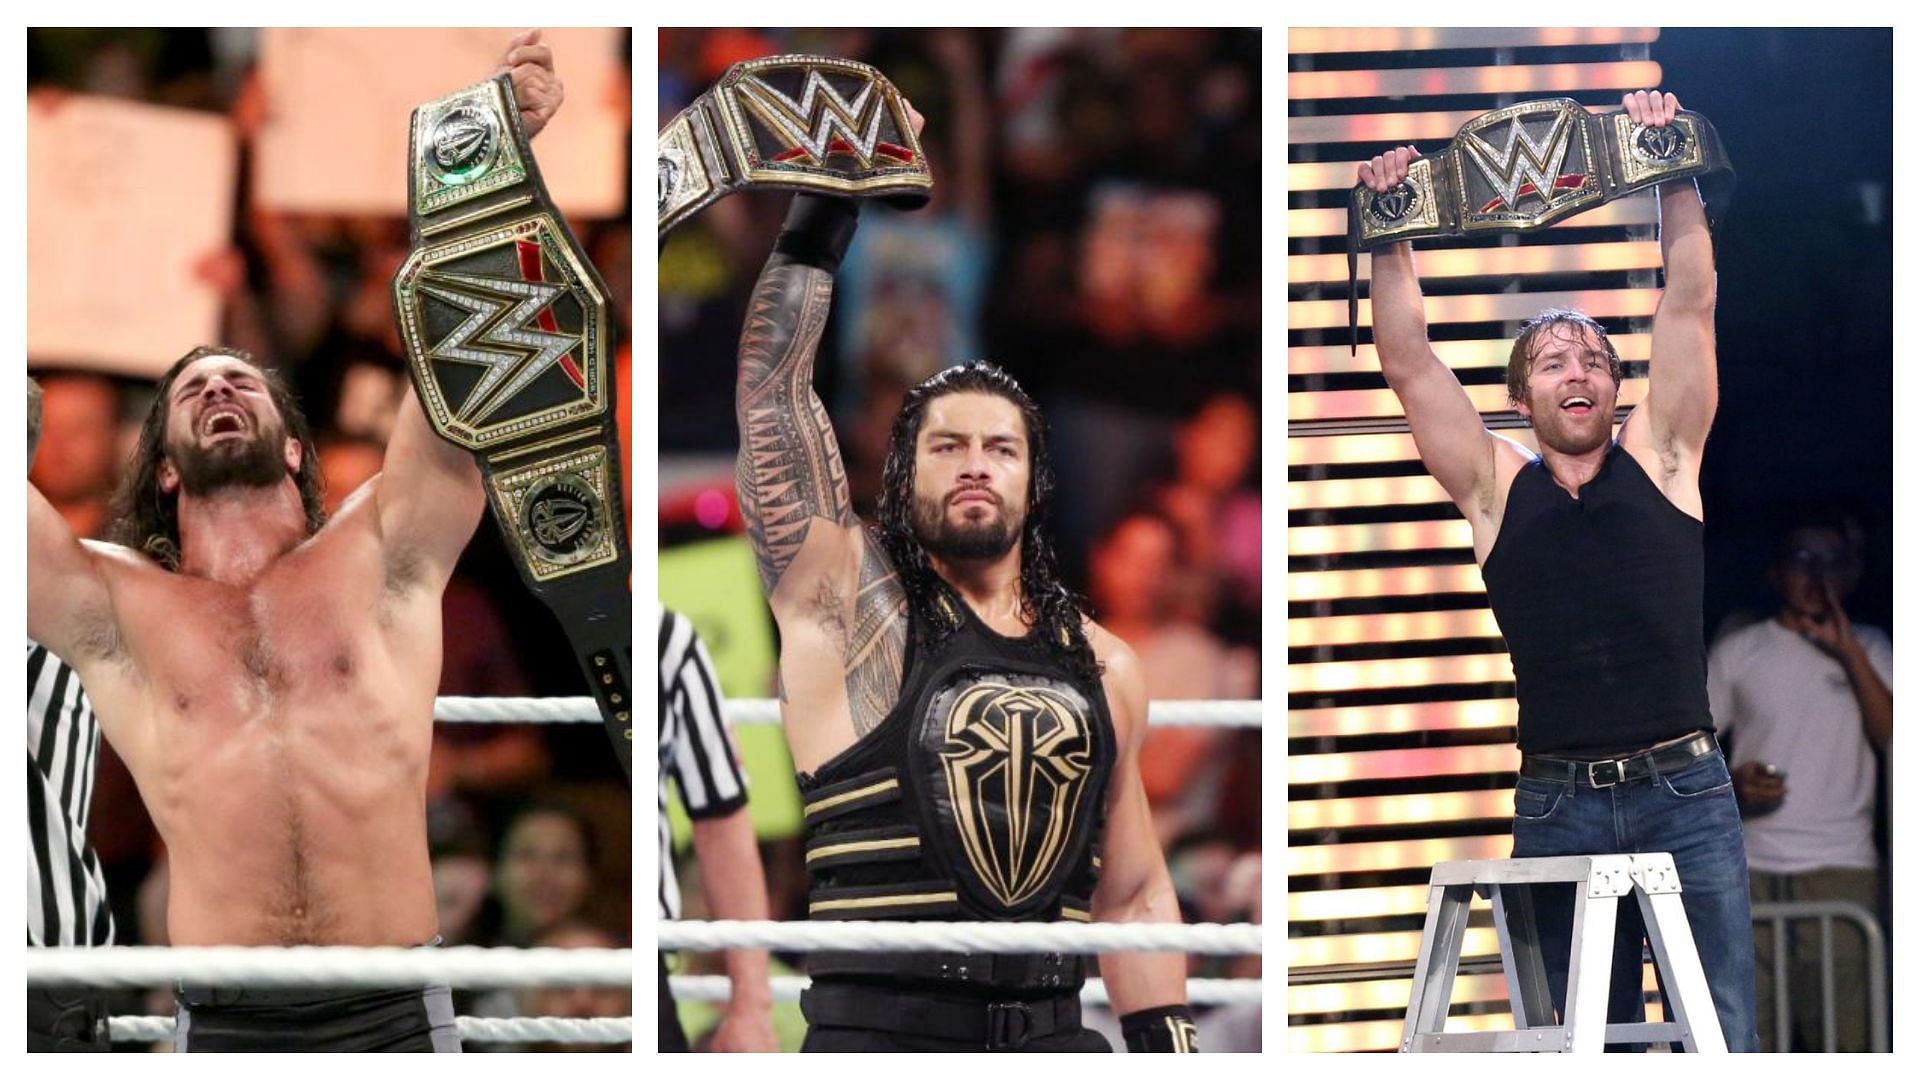 All three Shield members held the WWE Championship at MITB 2016